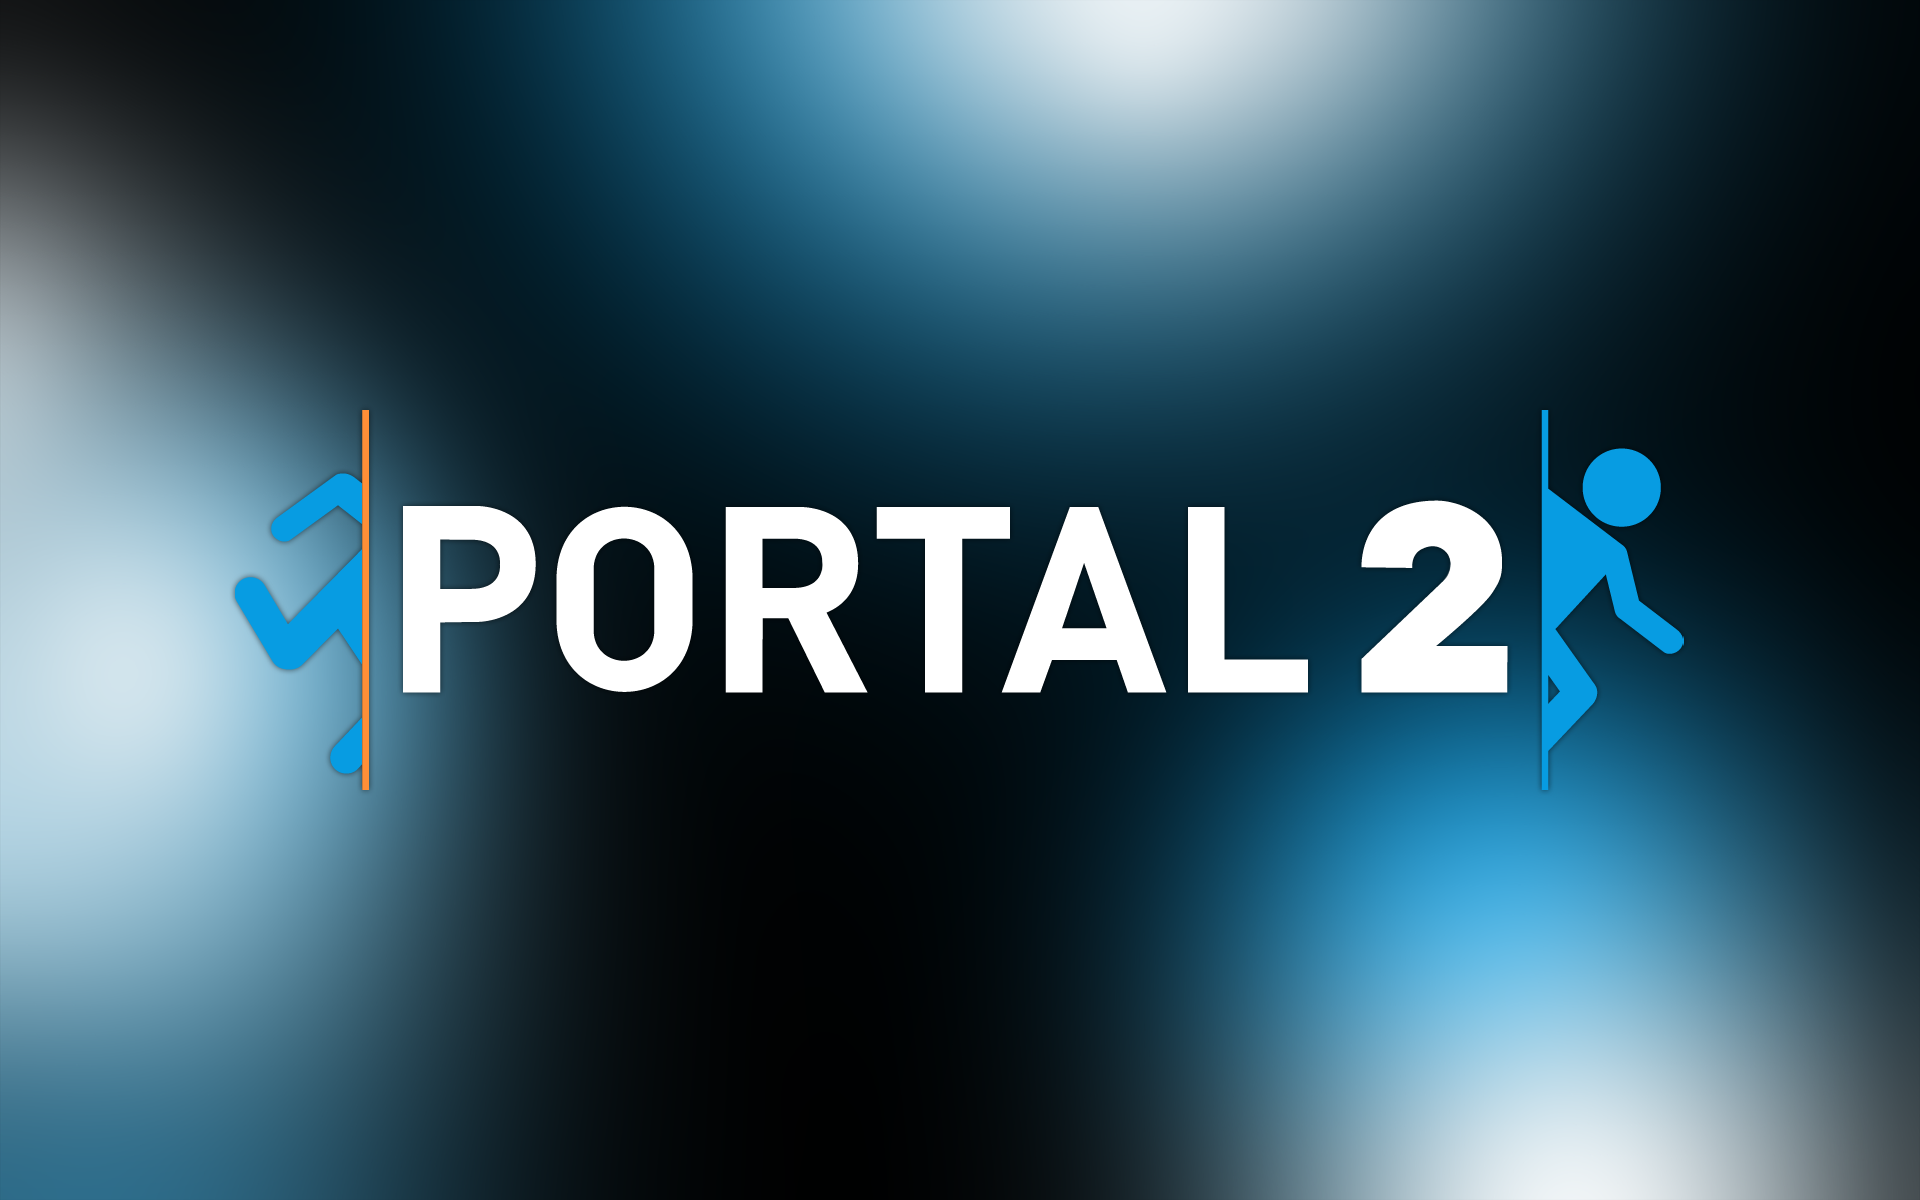 Portal desktop. Портал 2. Стрим портал 2. Portal игра. Портал 2 обои.